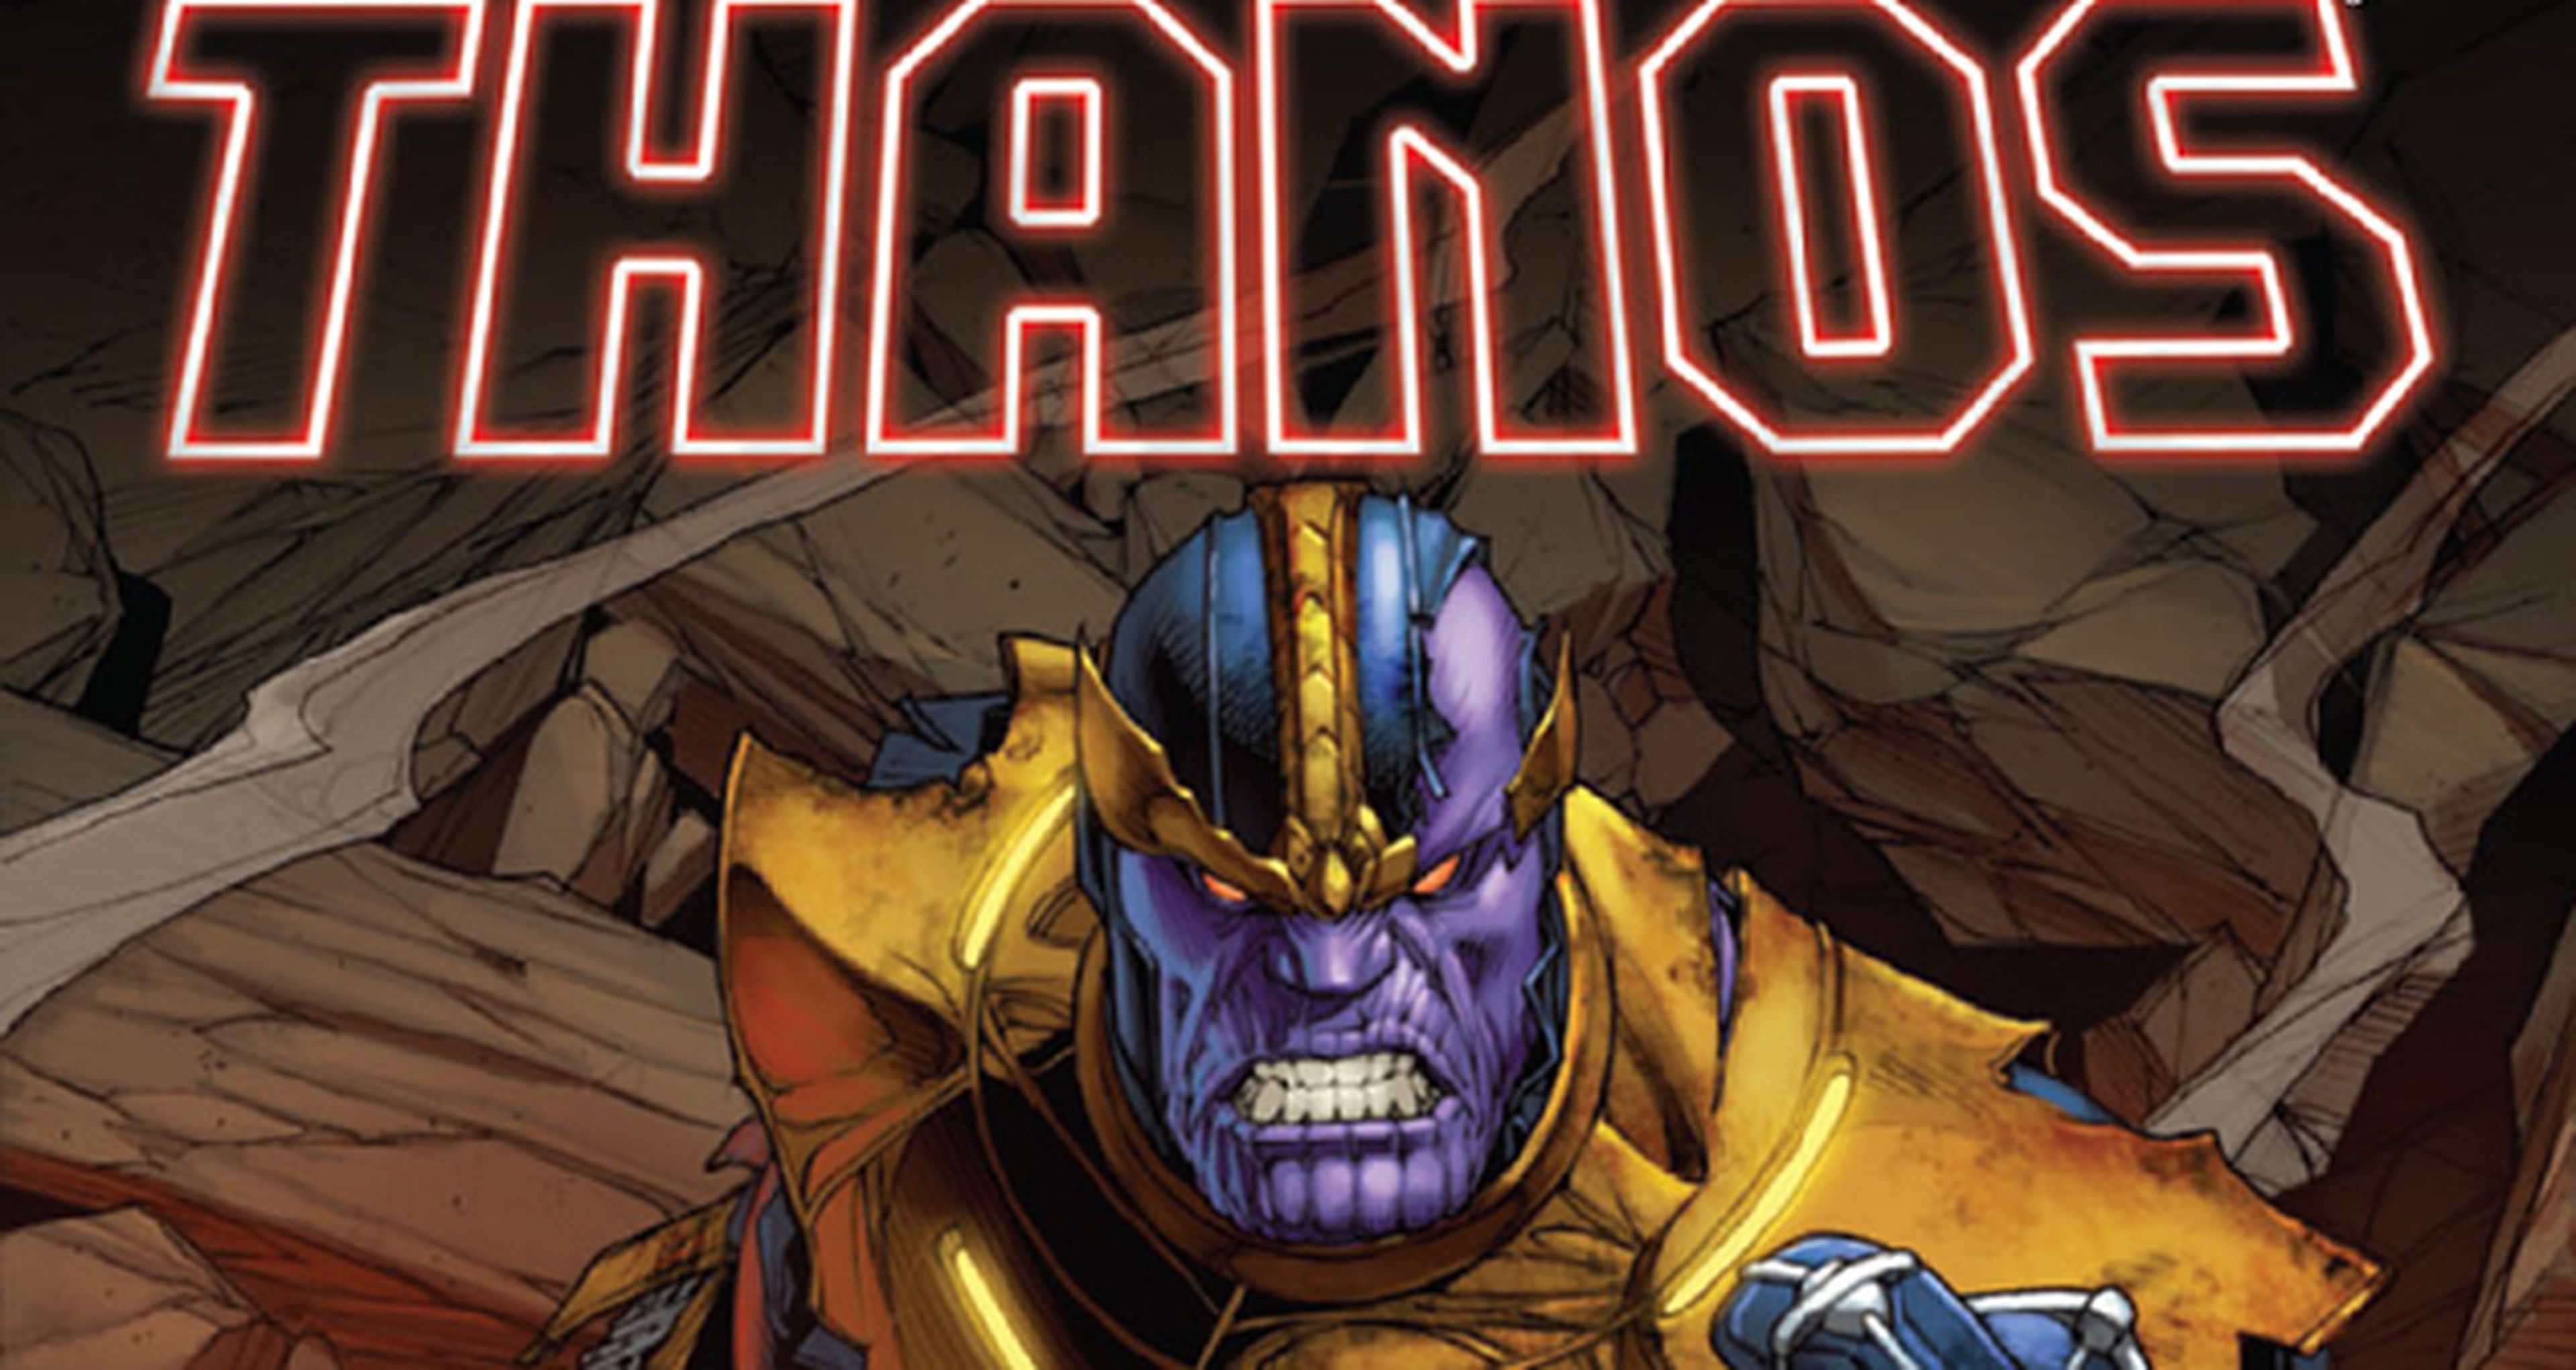 EEUU: Avance de Thanos Annual #1